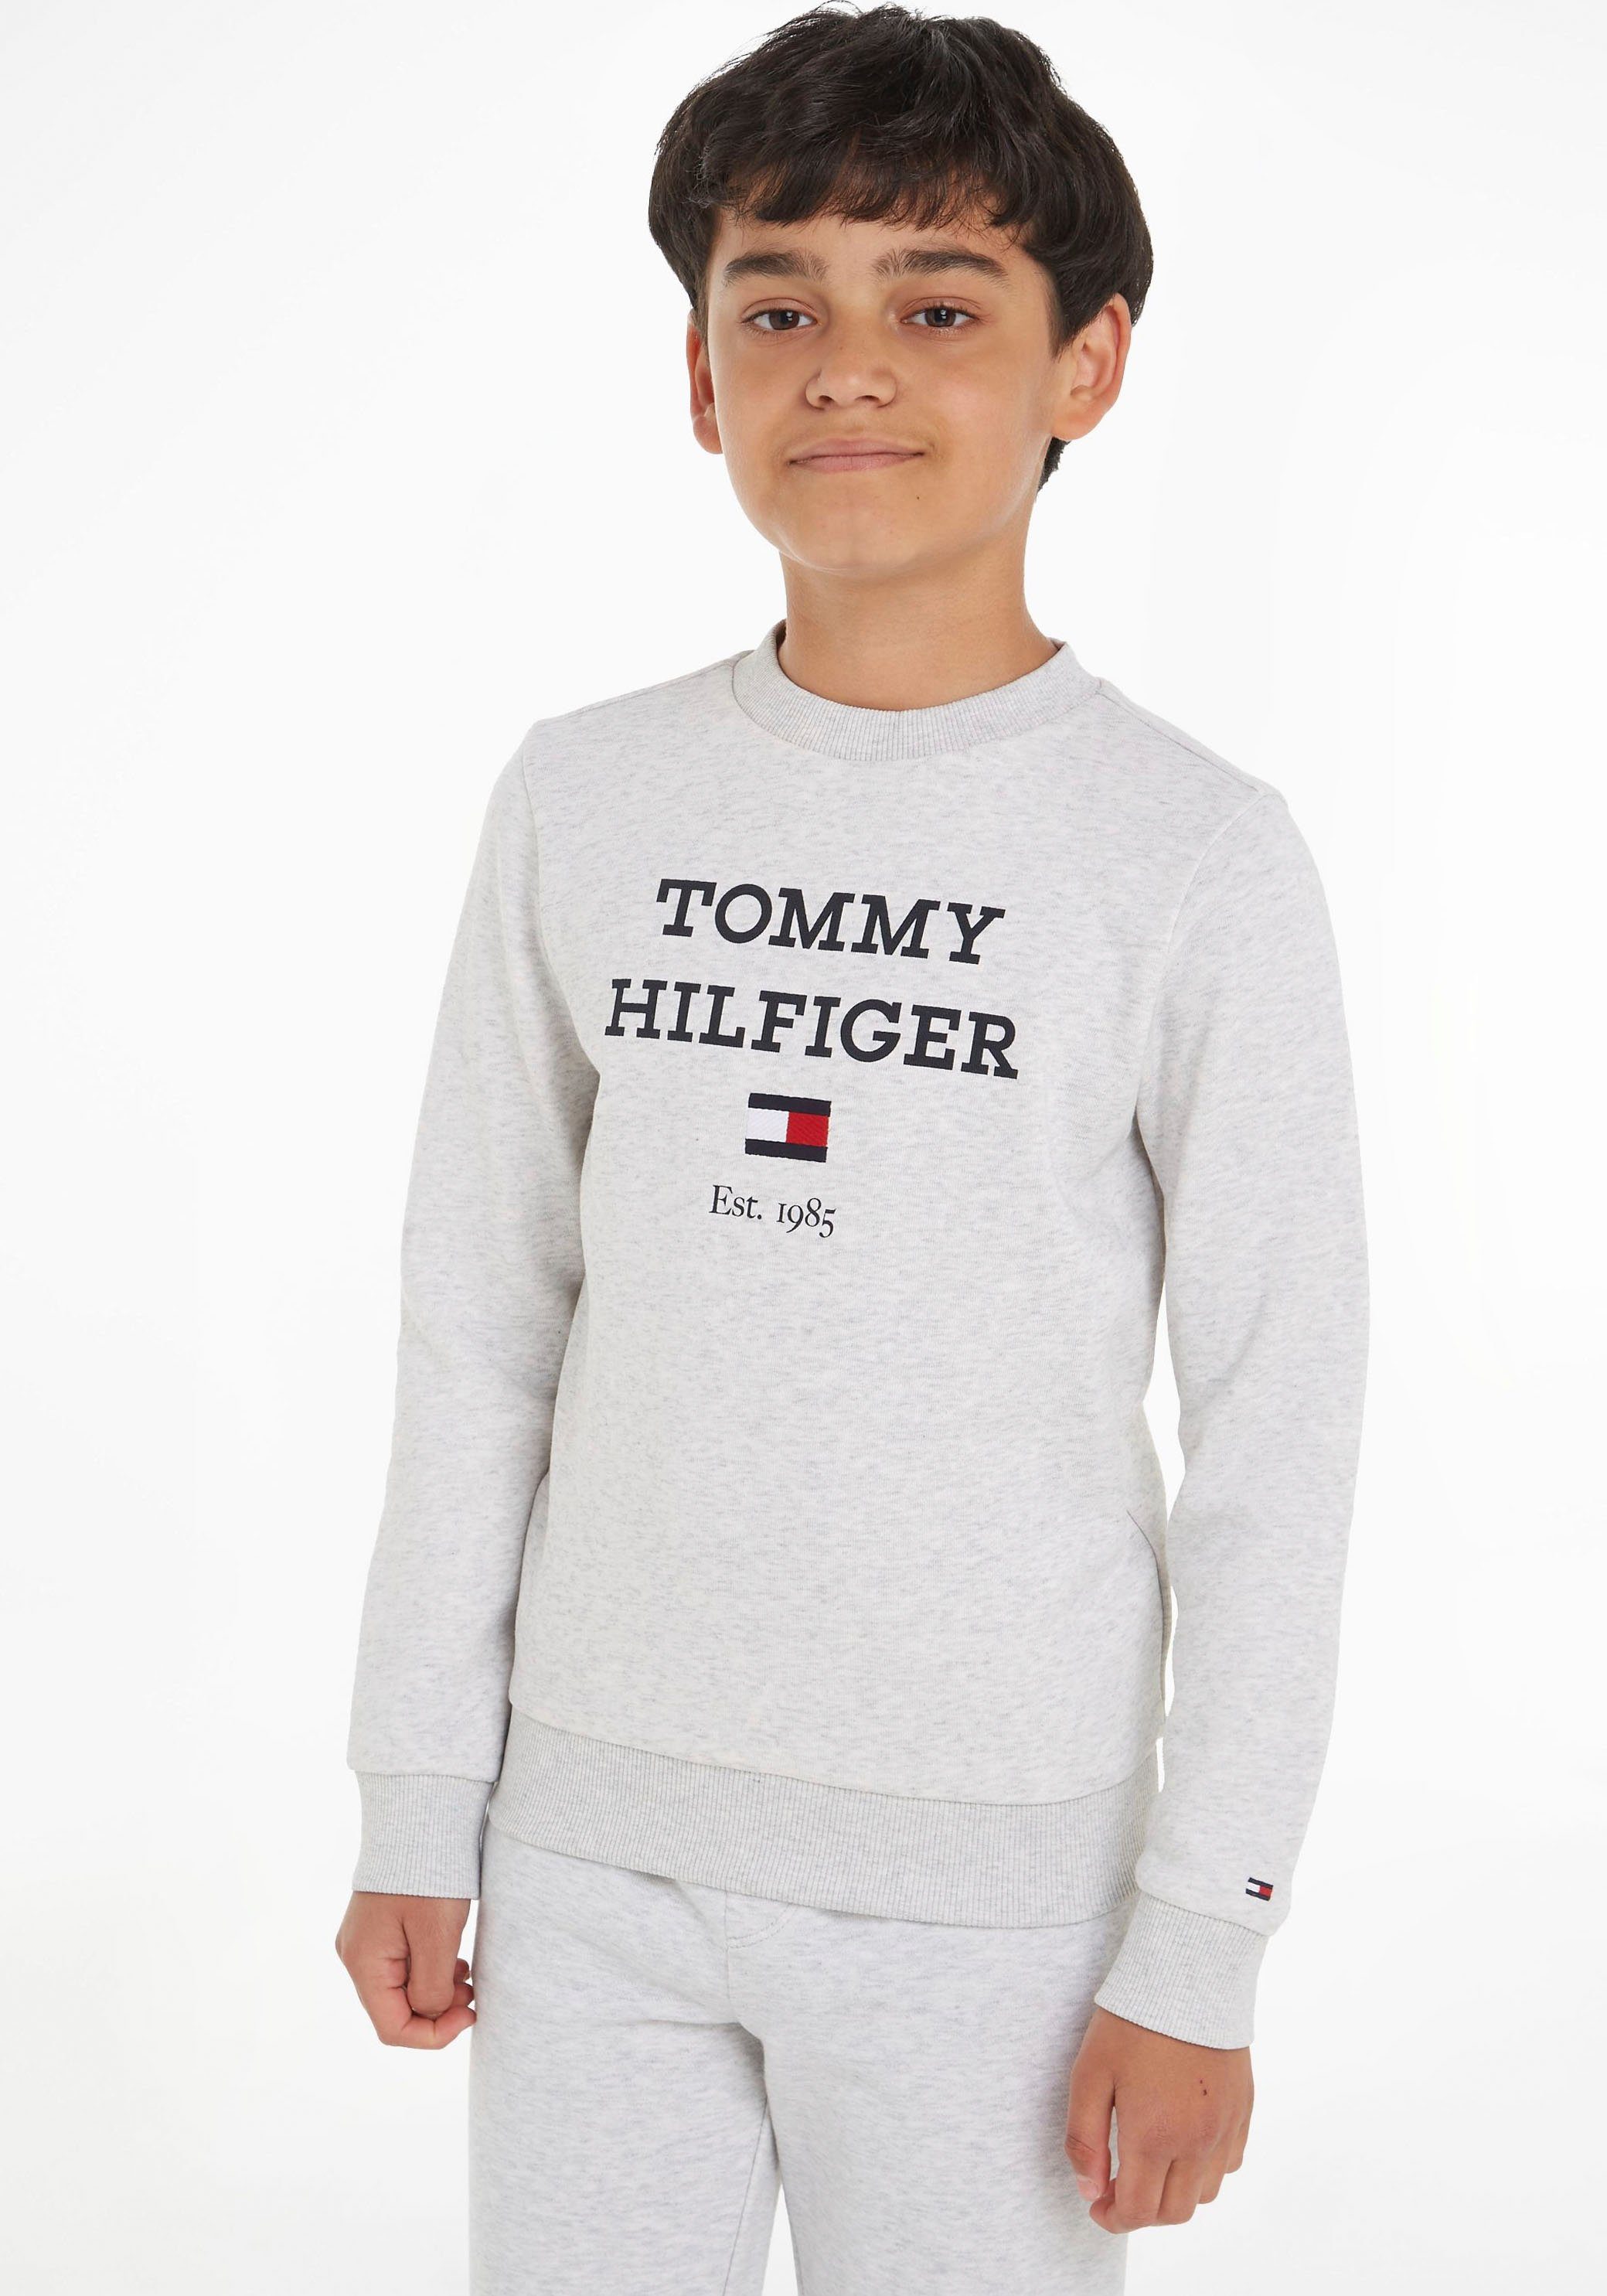 Tommy Hilfiger Sweatshirt TH LOGO SWEATSHIRT mit großem Logo light grey